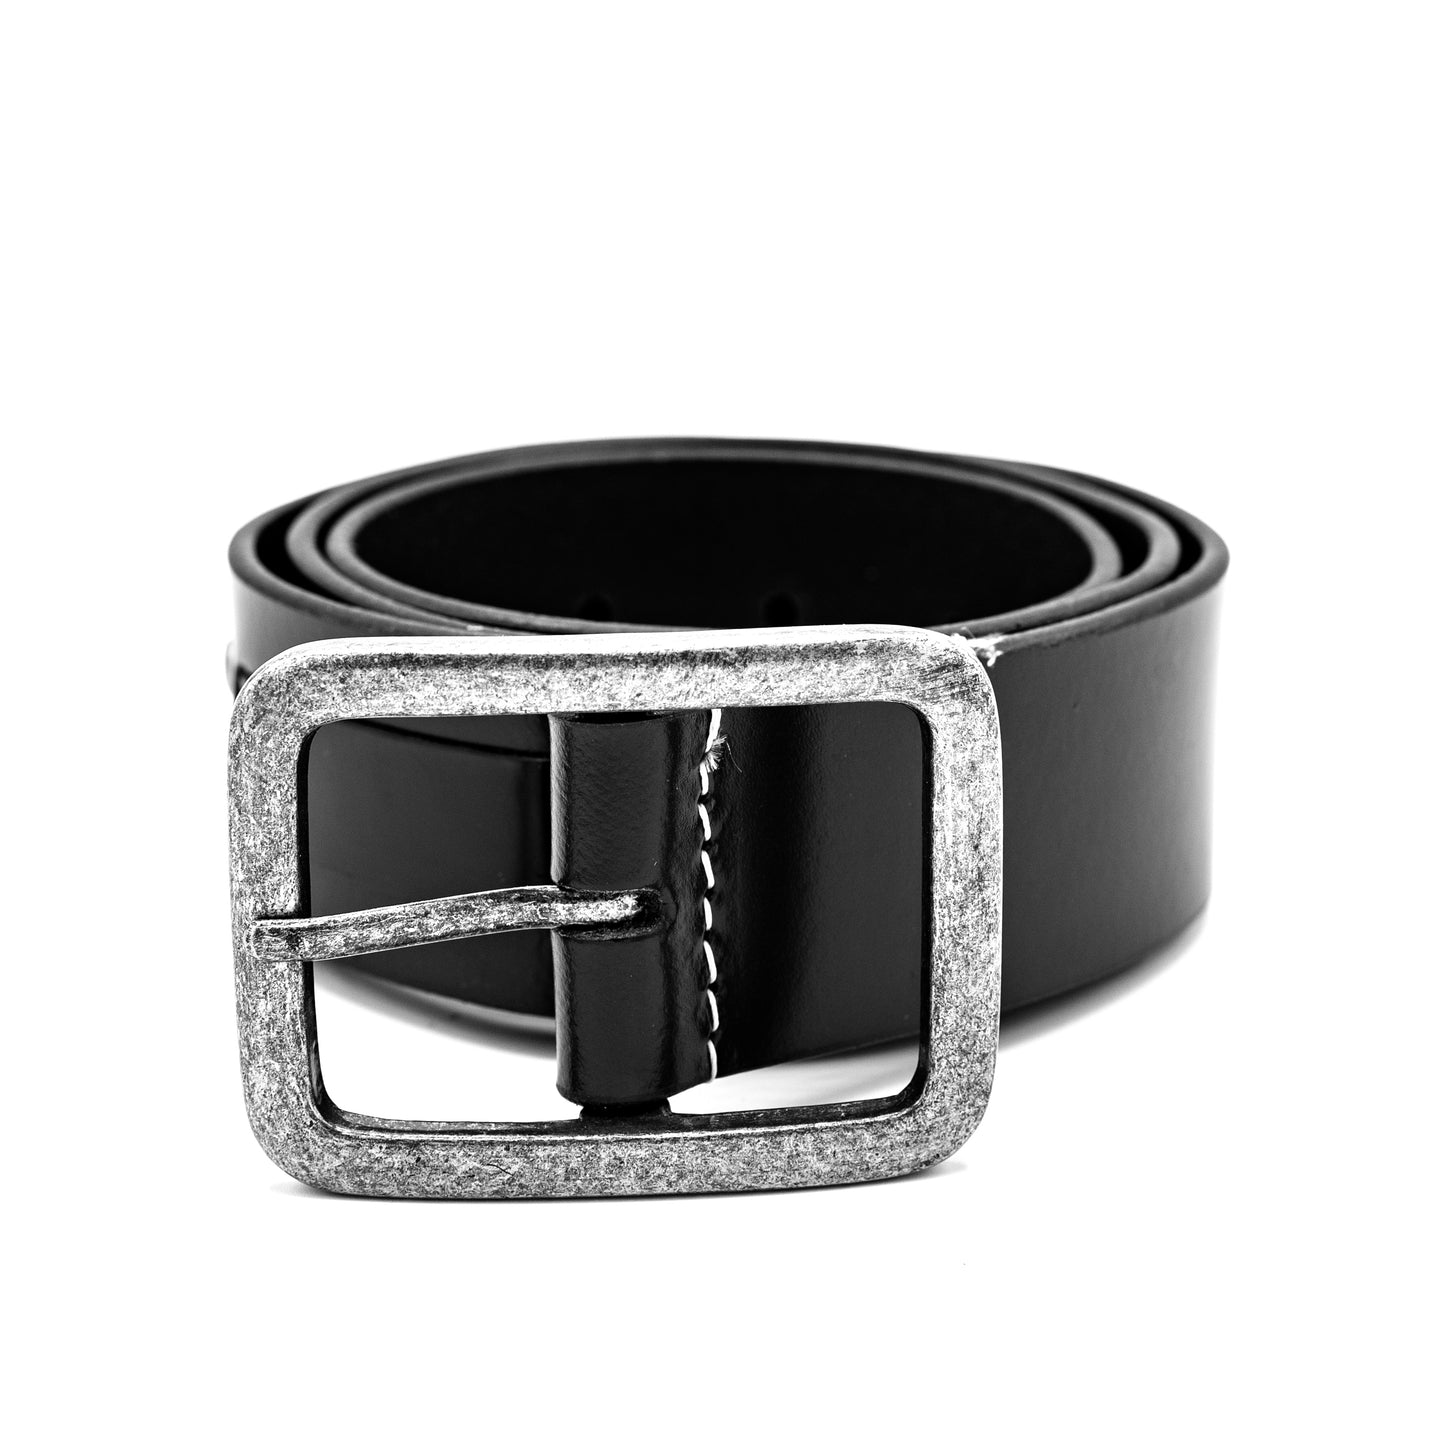 Belt for men Black Leather Studs Jeans Casual Single Buckle belt J9714